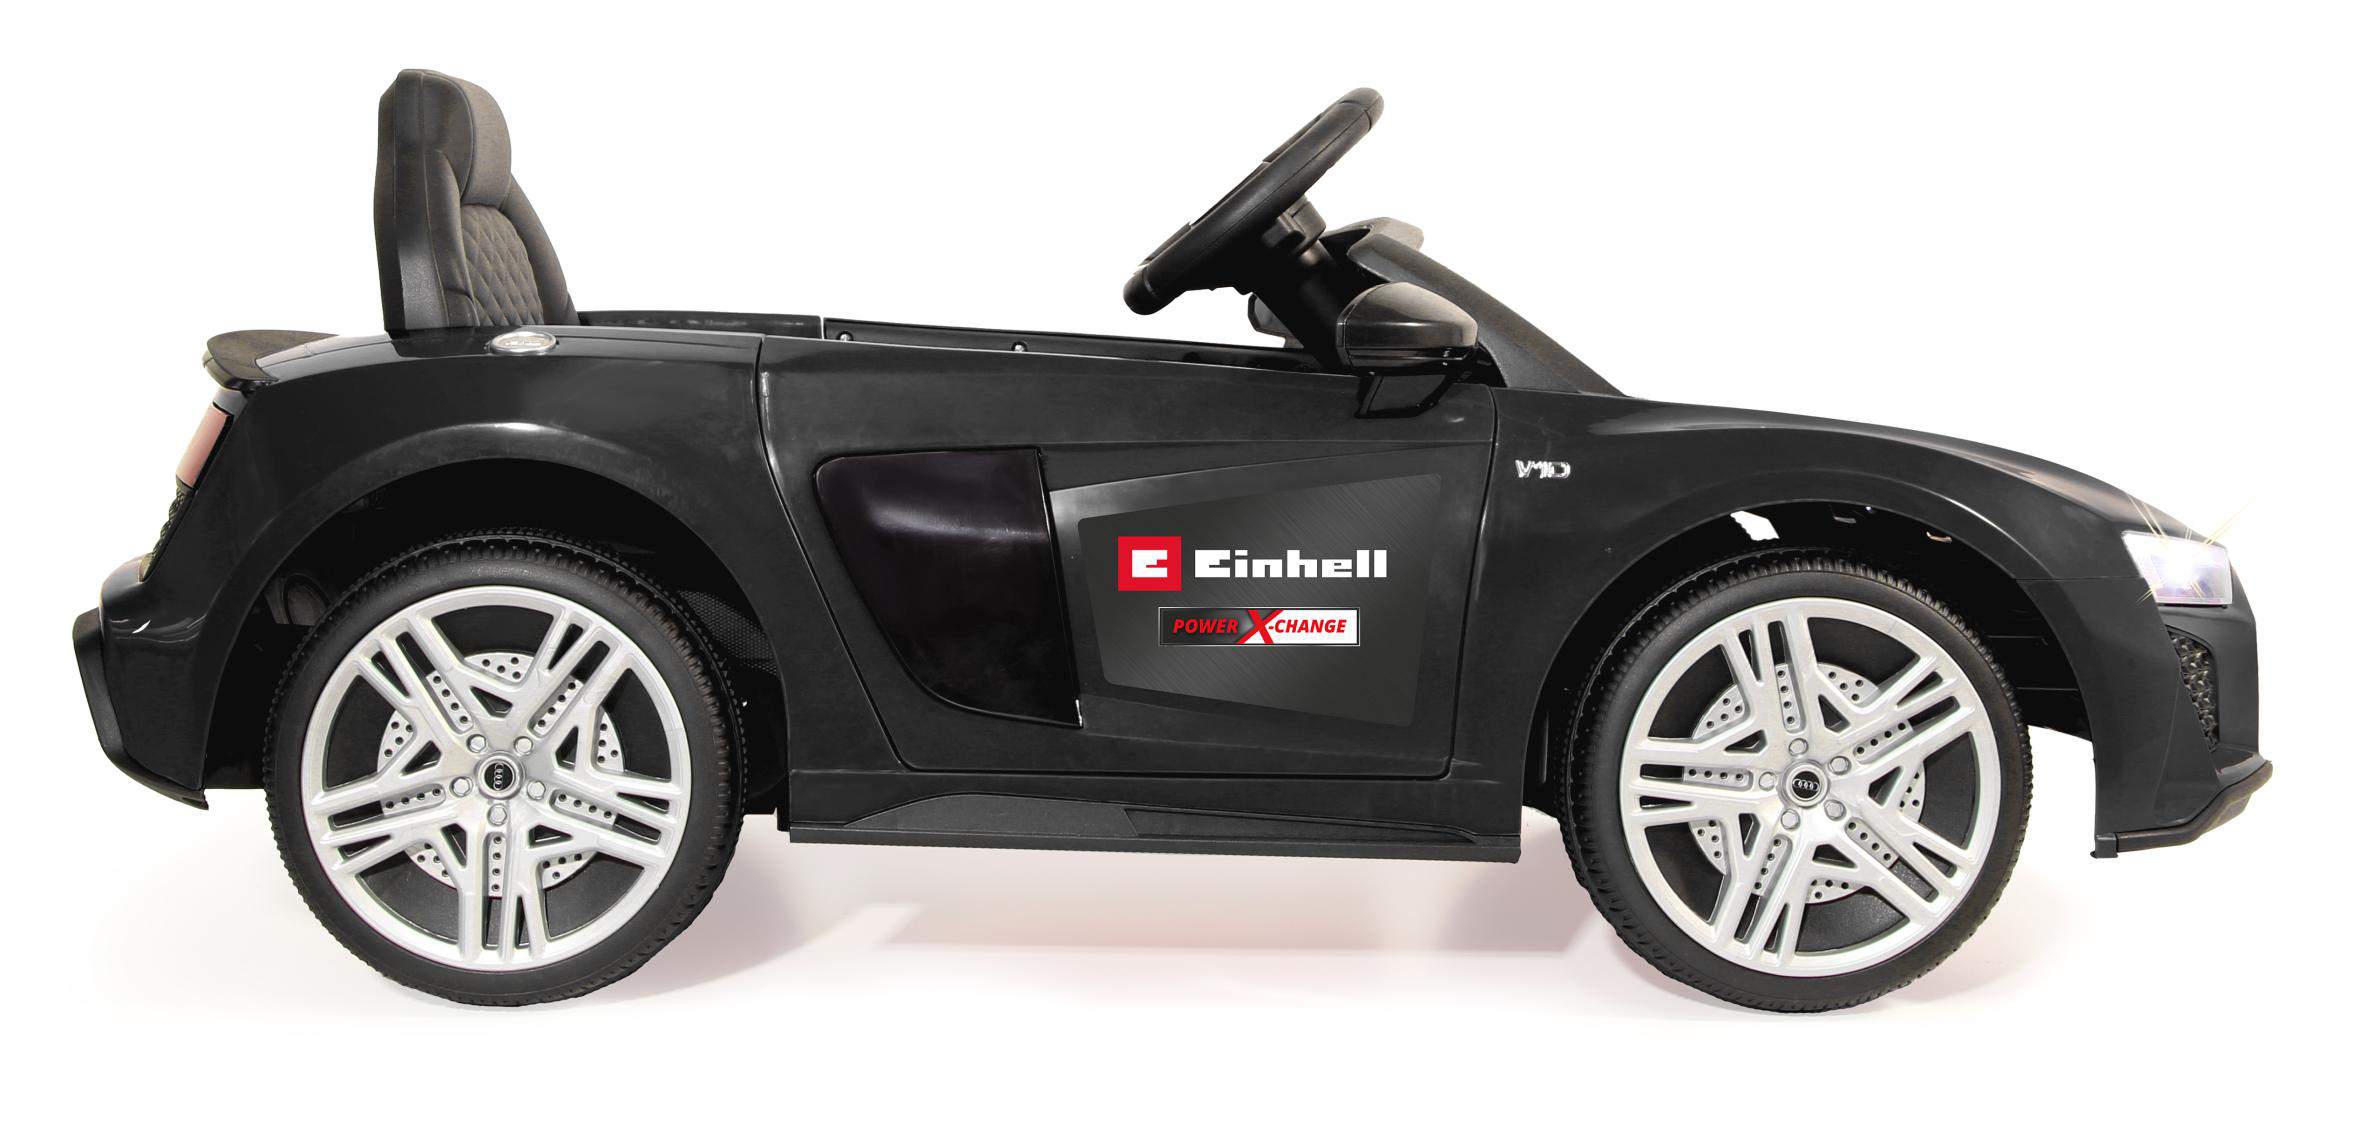 JAMARA KIDS 18V Ride-on Elektrofahrzeug Set Audi X-Change R8 Spyder inkl. Einhell Starter Schwarz schwarz Power